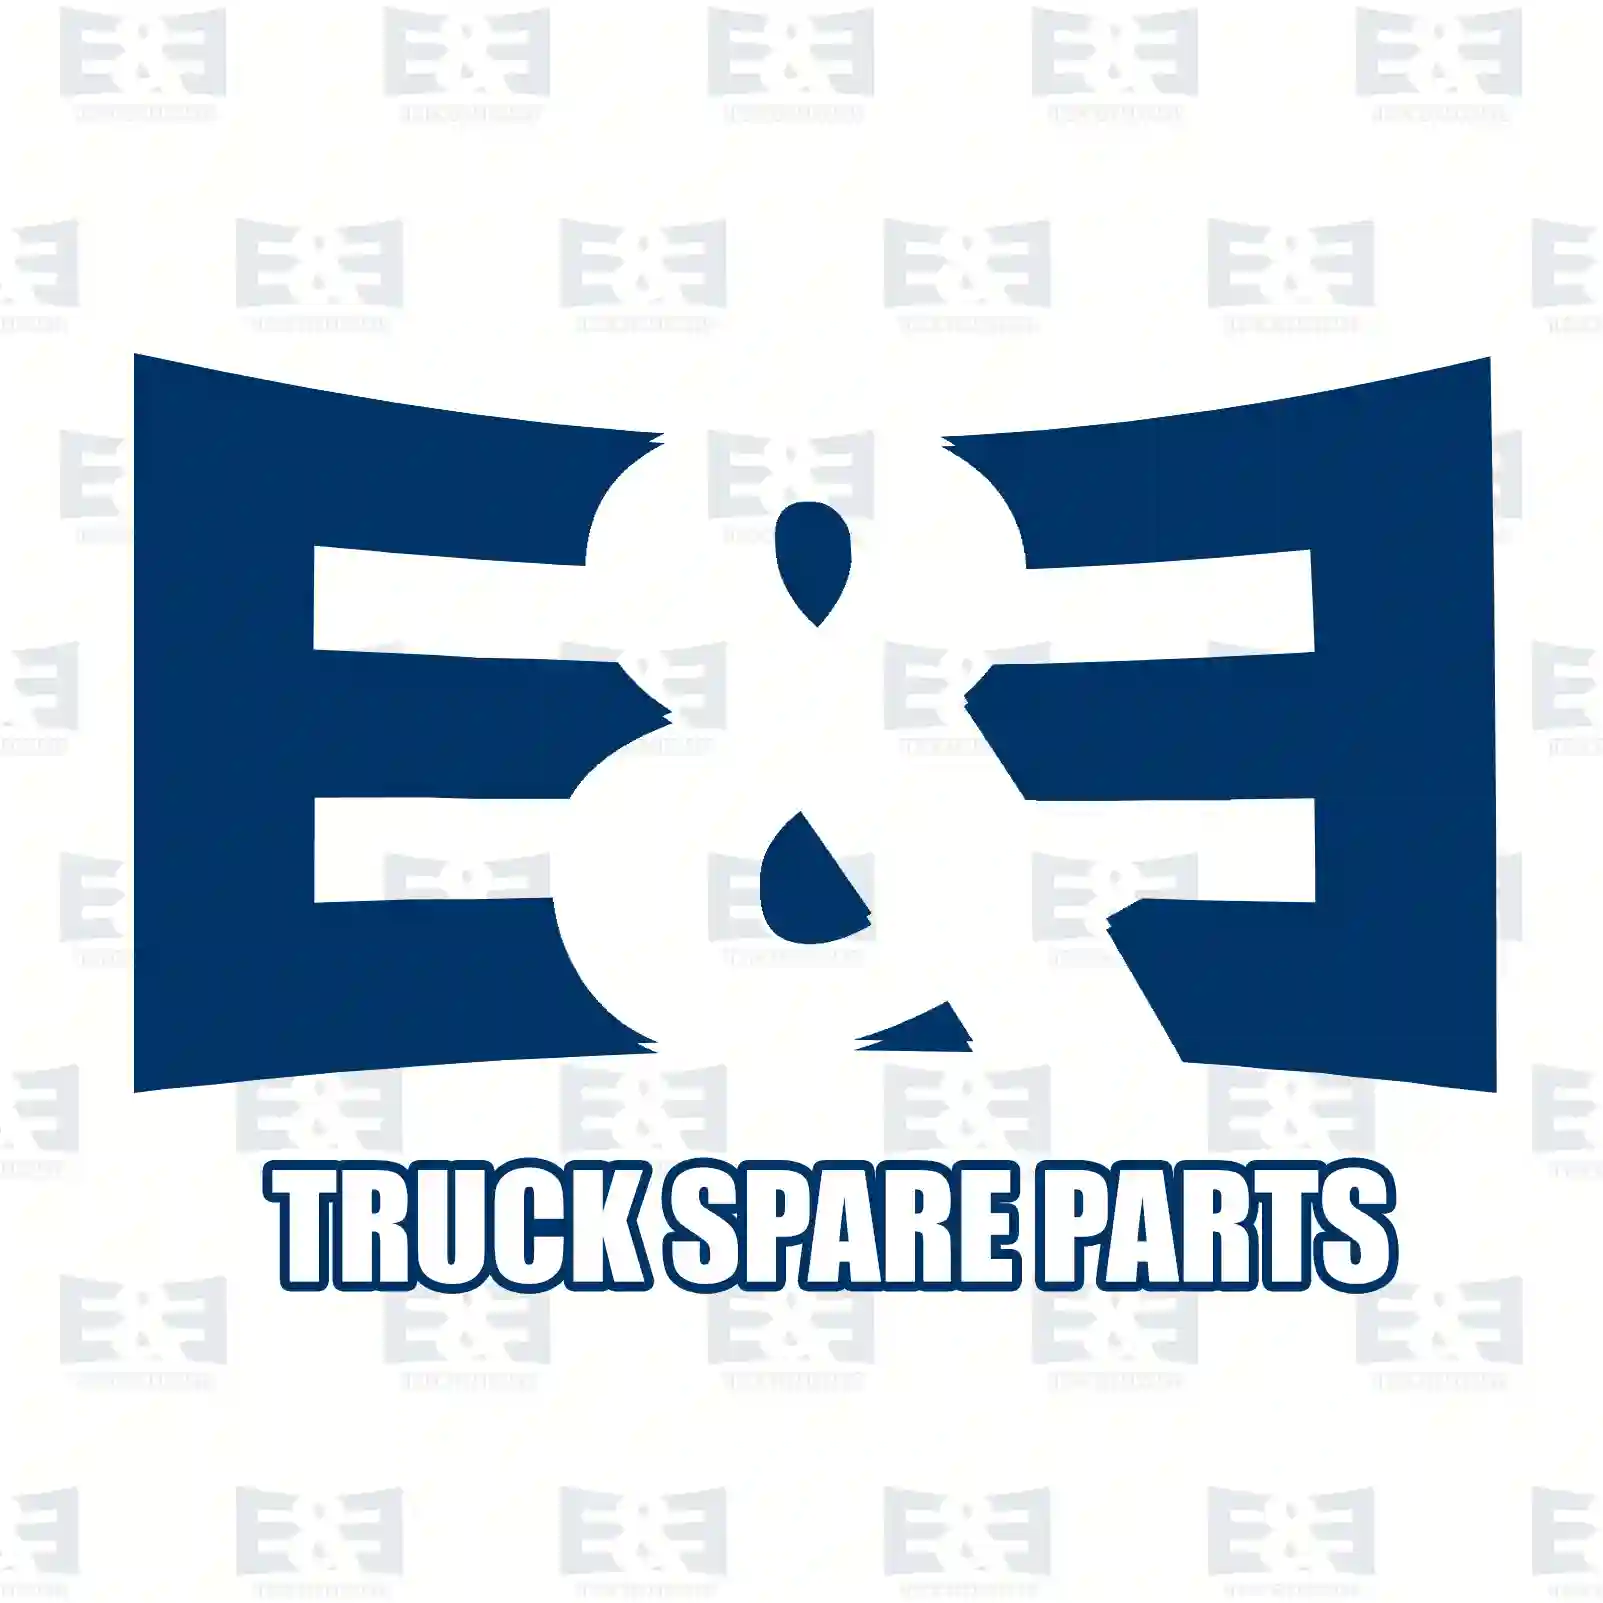 Input shaft, 2E2278837, 1673542, 20781951, 8171556 ||  2E2278837 E&E Truck Spare Parts | Truck Spare Parts, Auotomotive Spare Parts Input shaft, 2E2278837, 1673542, 20781951, 8171556 ||  2E2278837 E&E Truck Spare Parts | Truck Spare Parts, Auotomotive Spare Parts